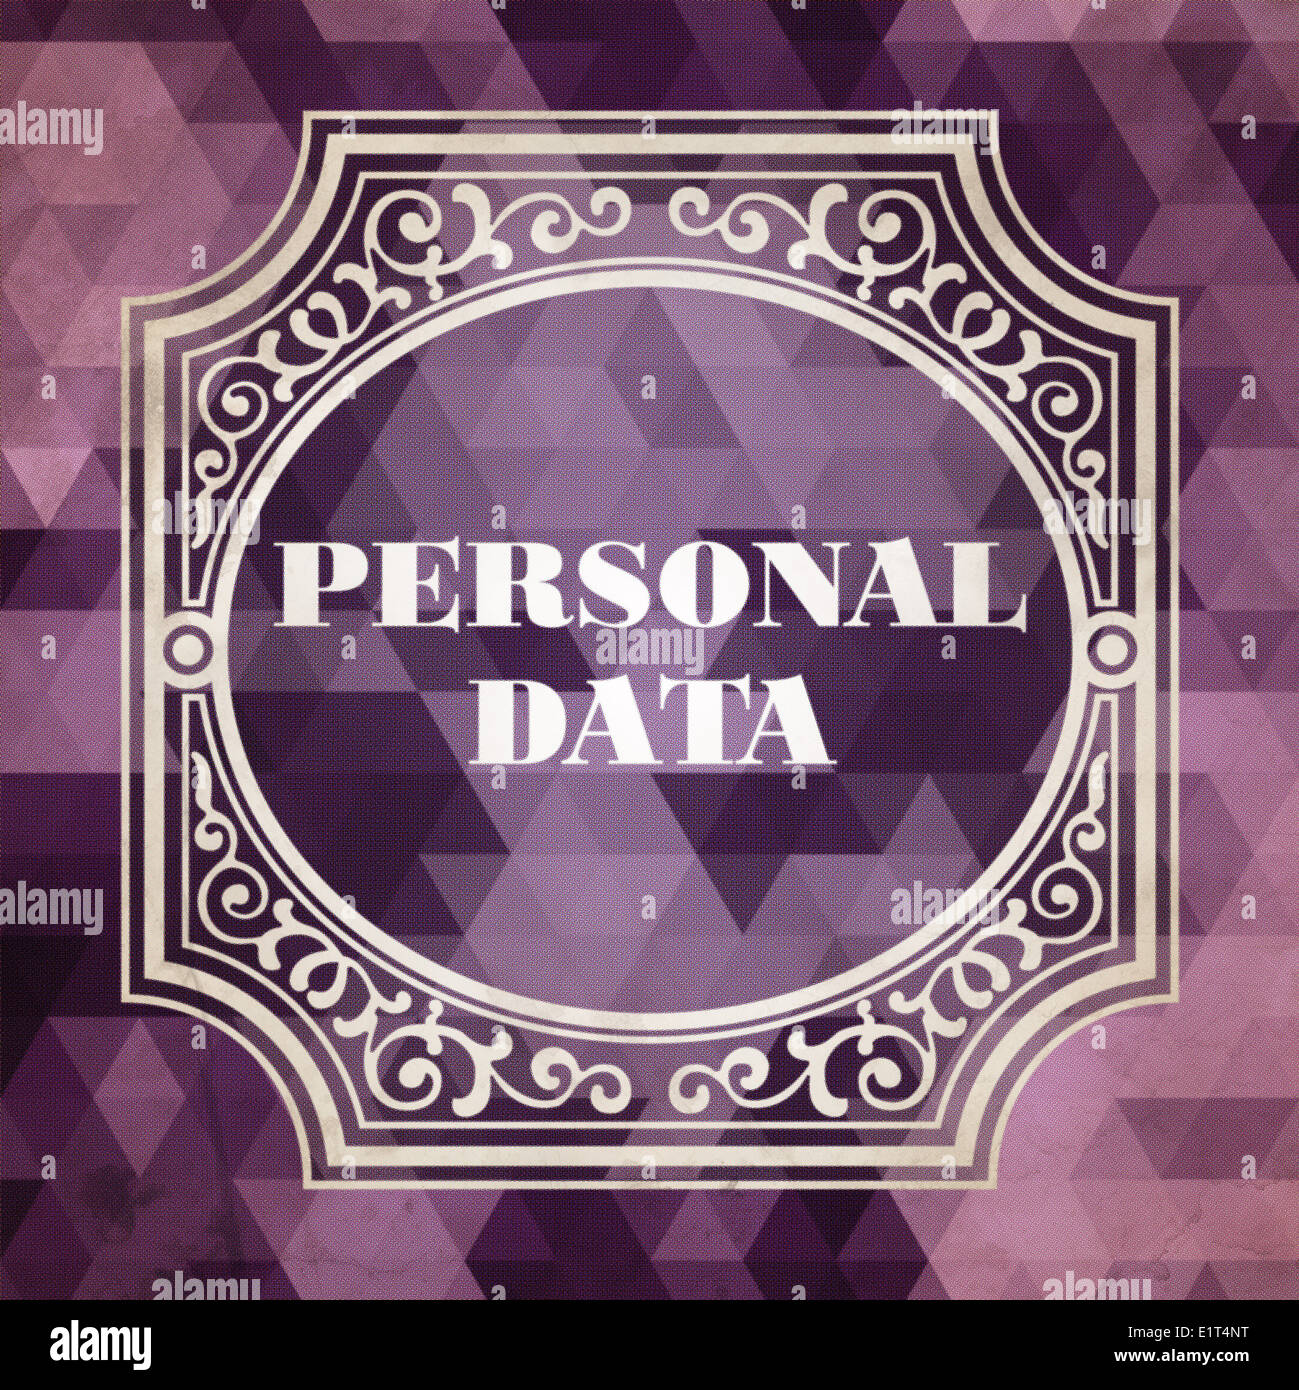 Personal Data Concept. Purple Vintage design. Stock Photo